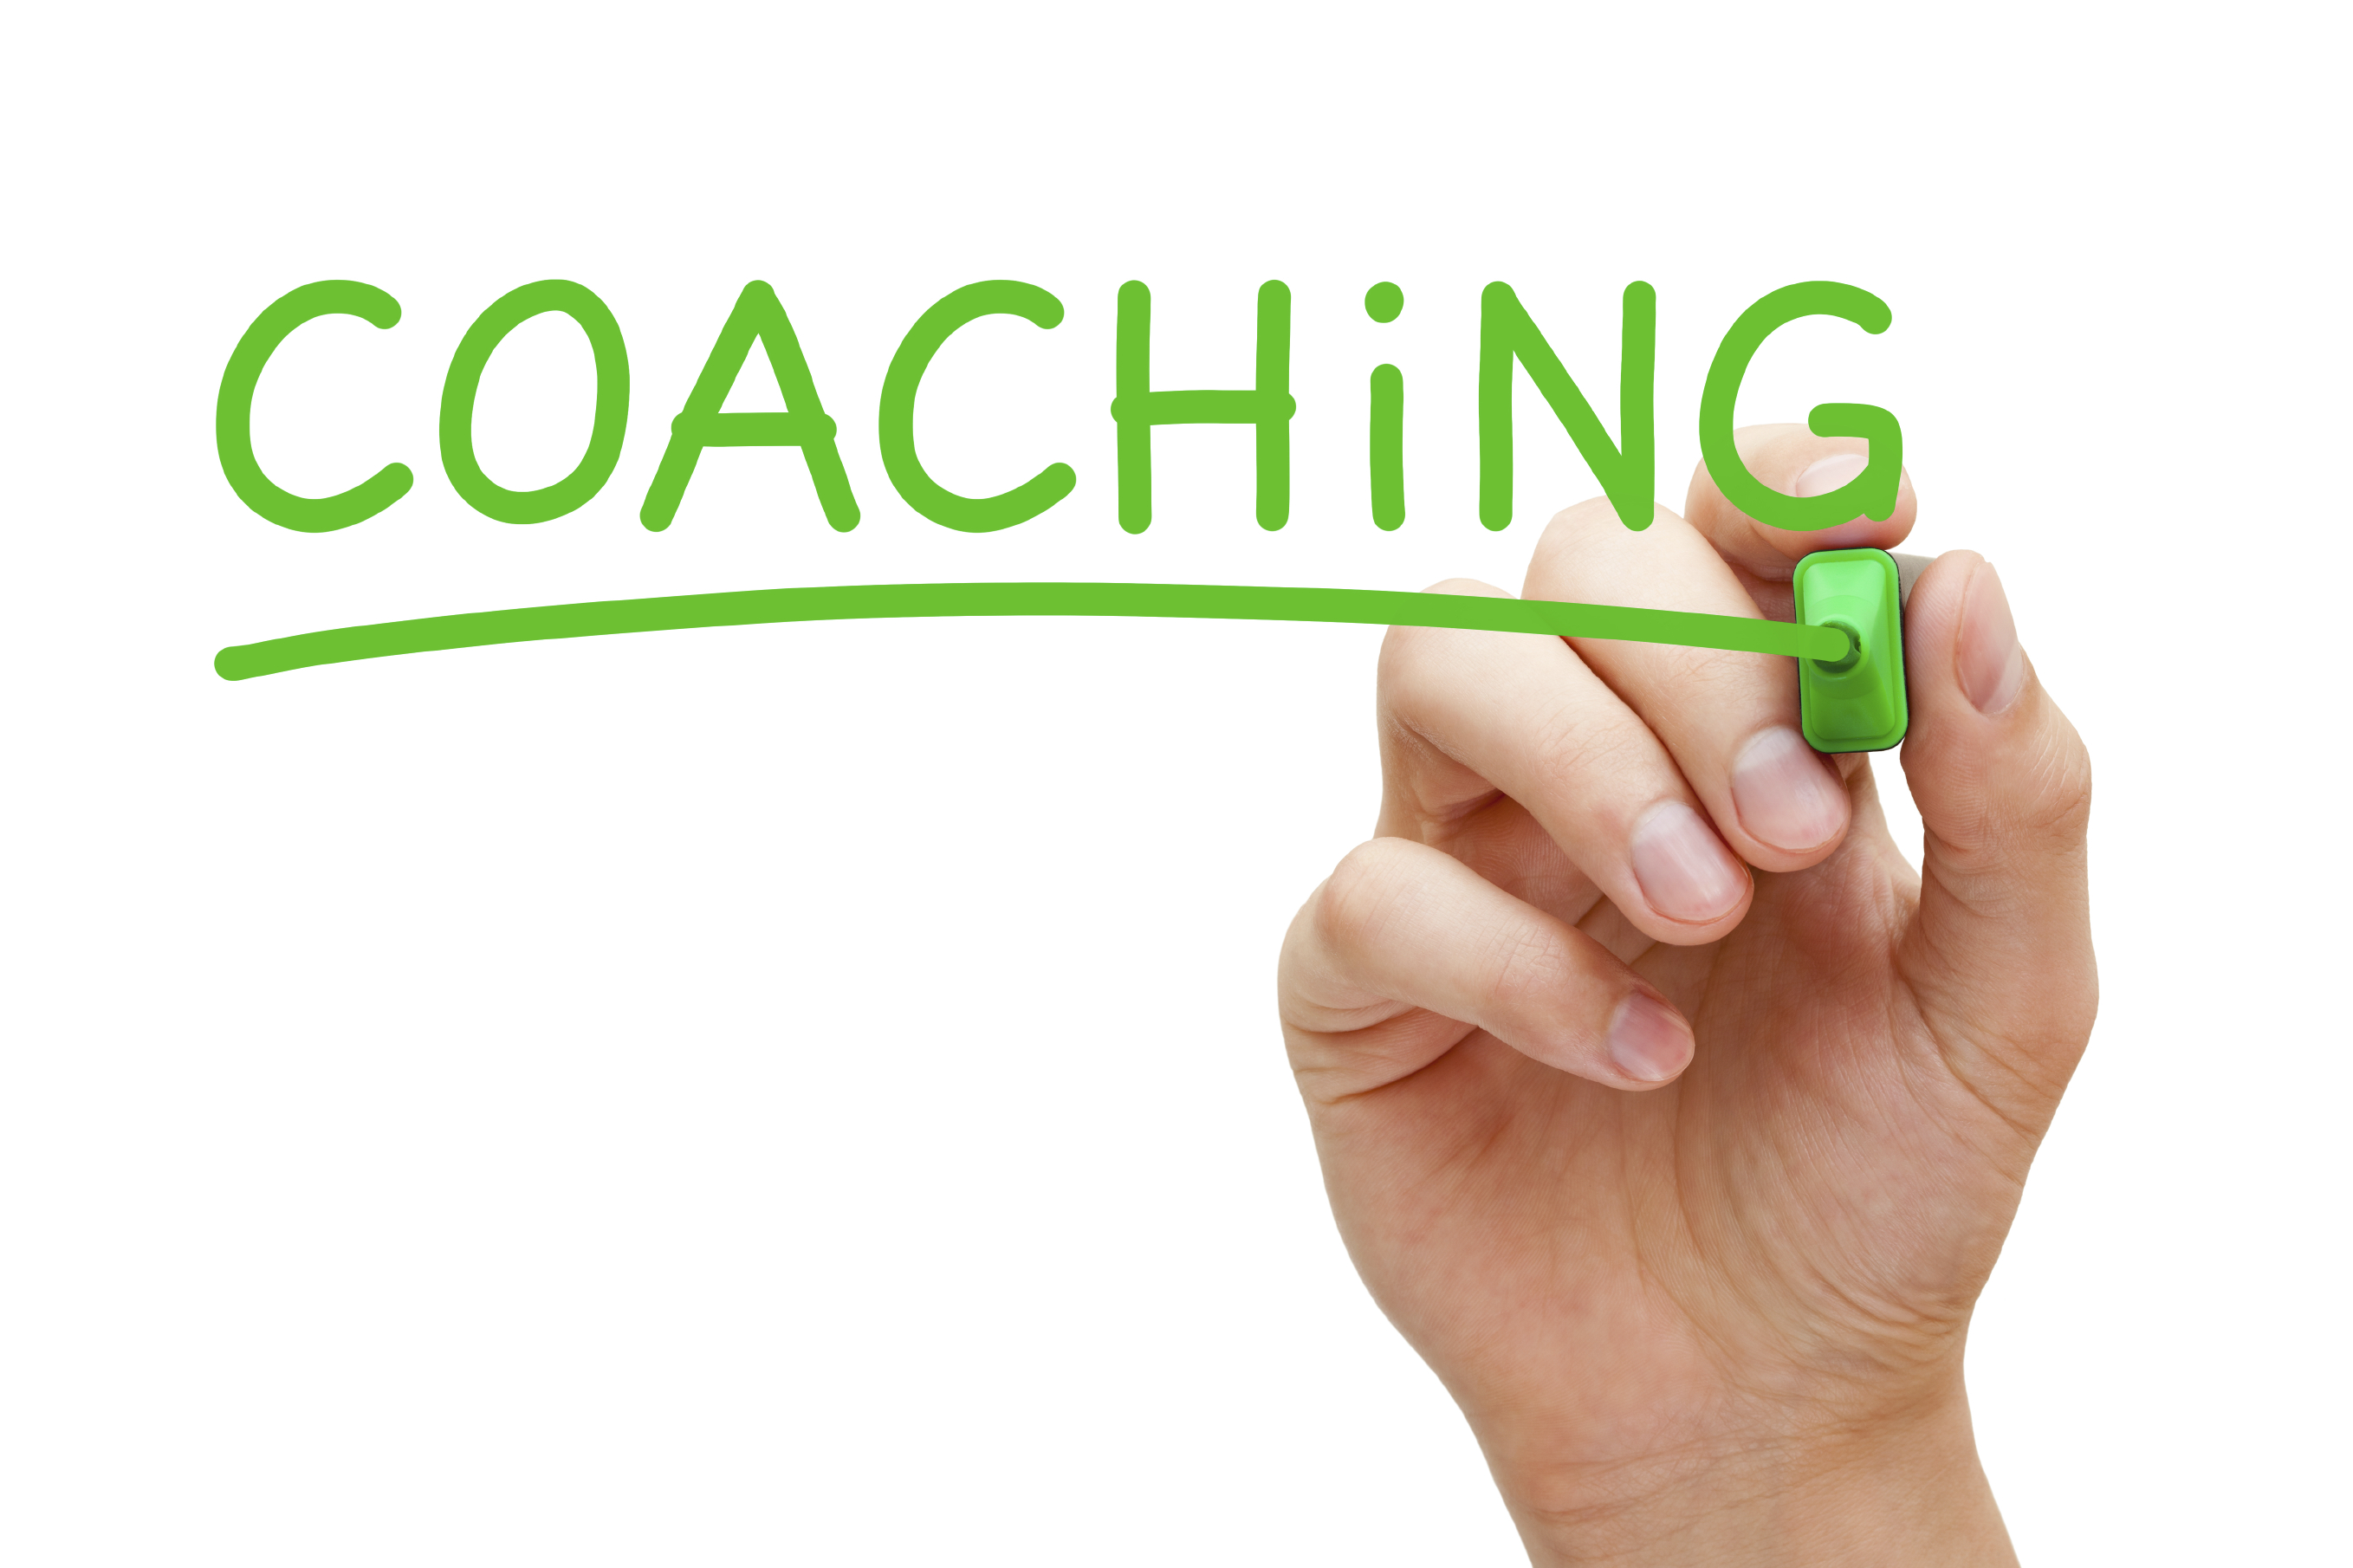  Volunteer your coaching skills